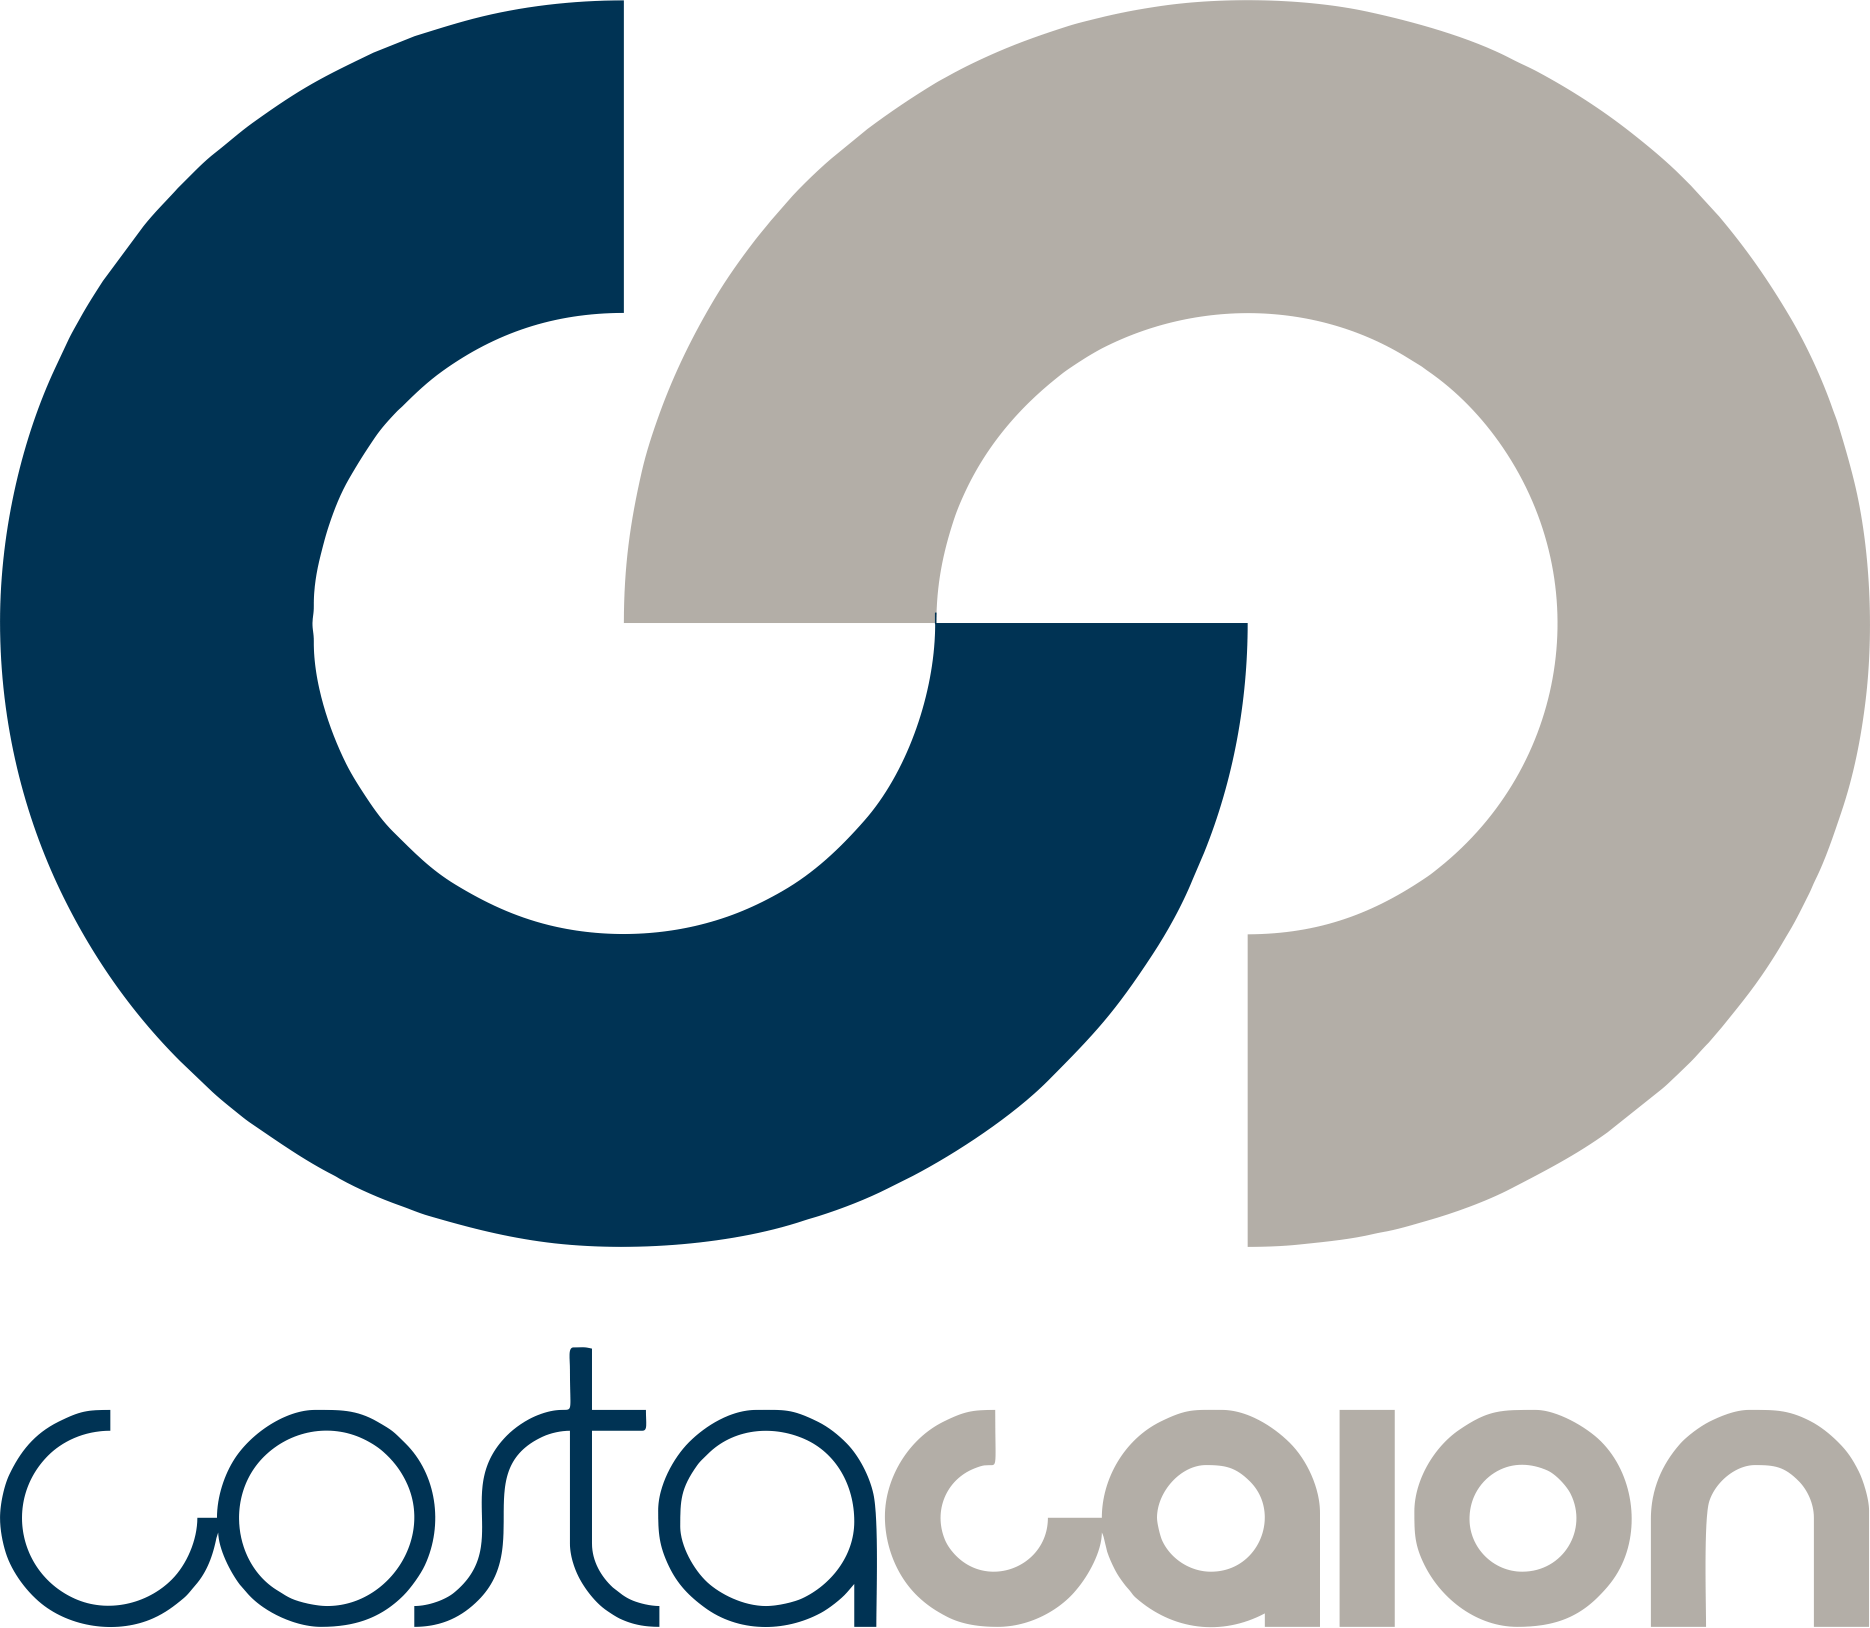 Logo Costa Caion